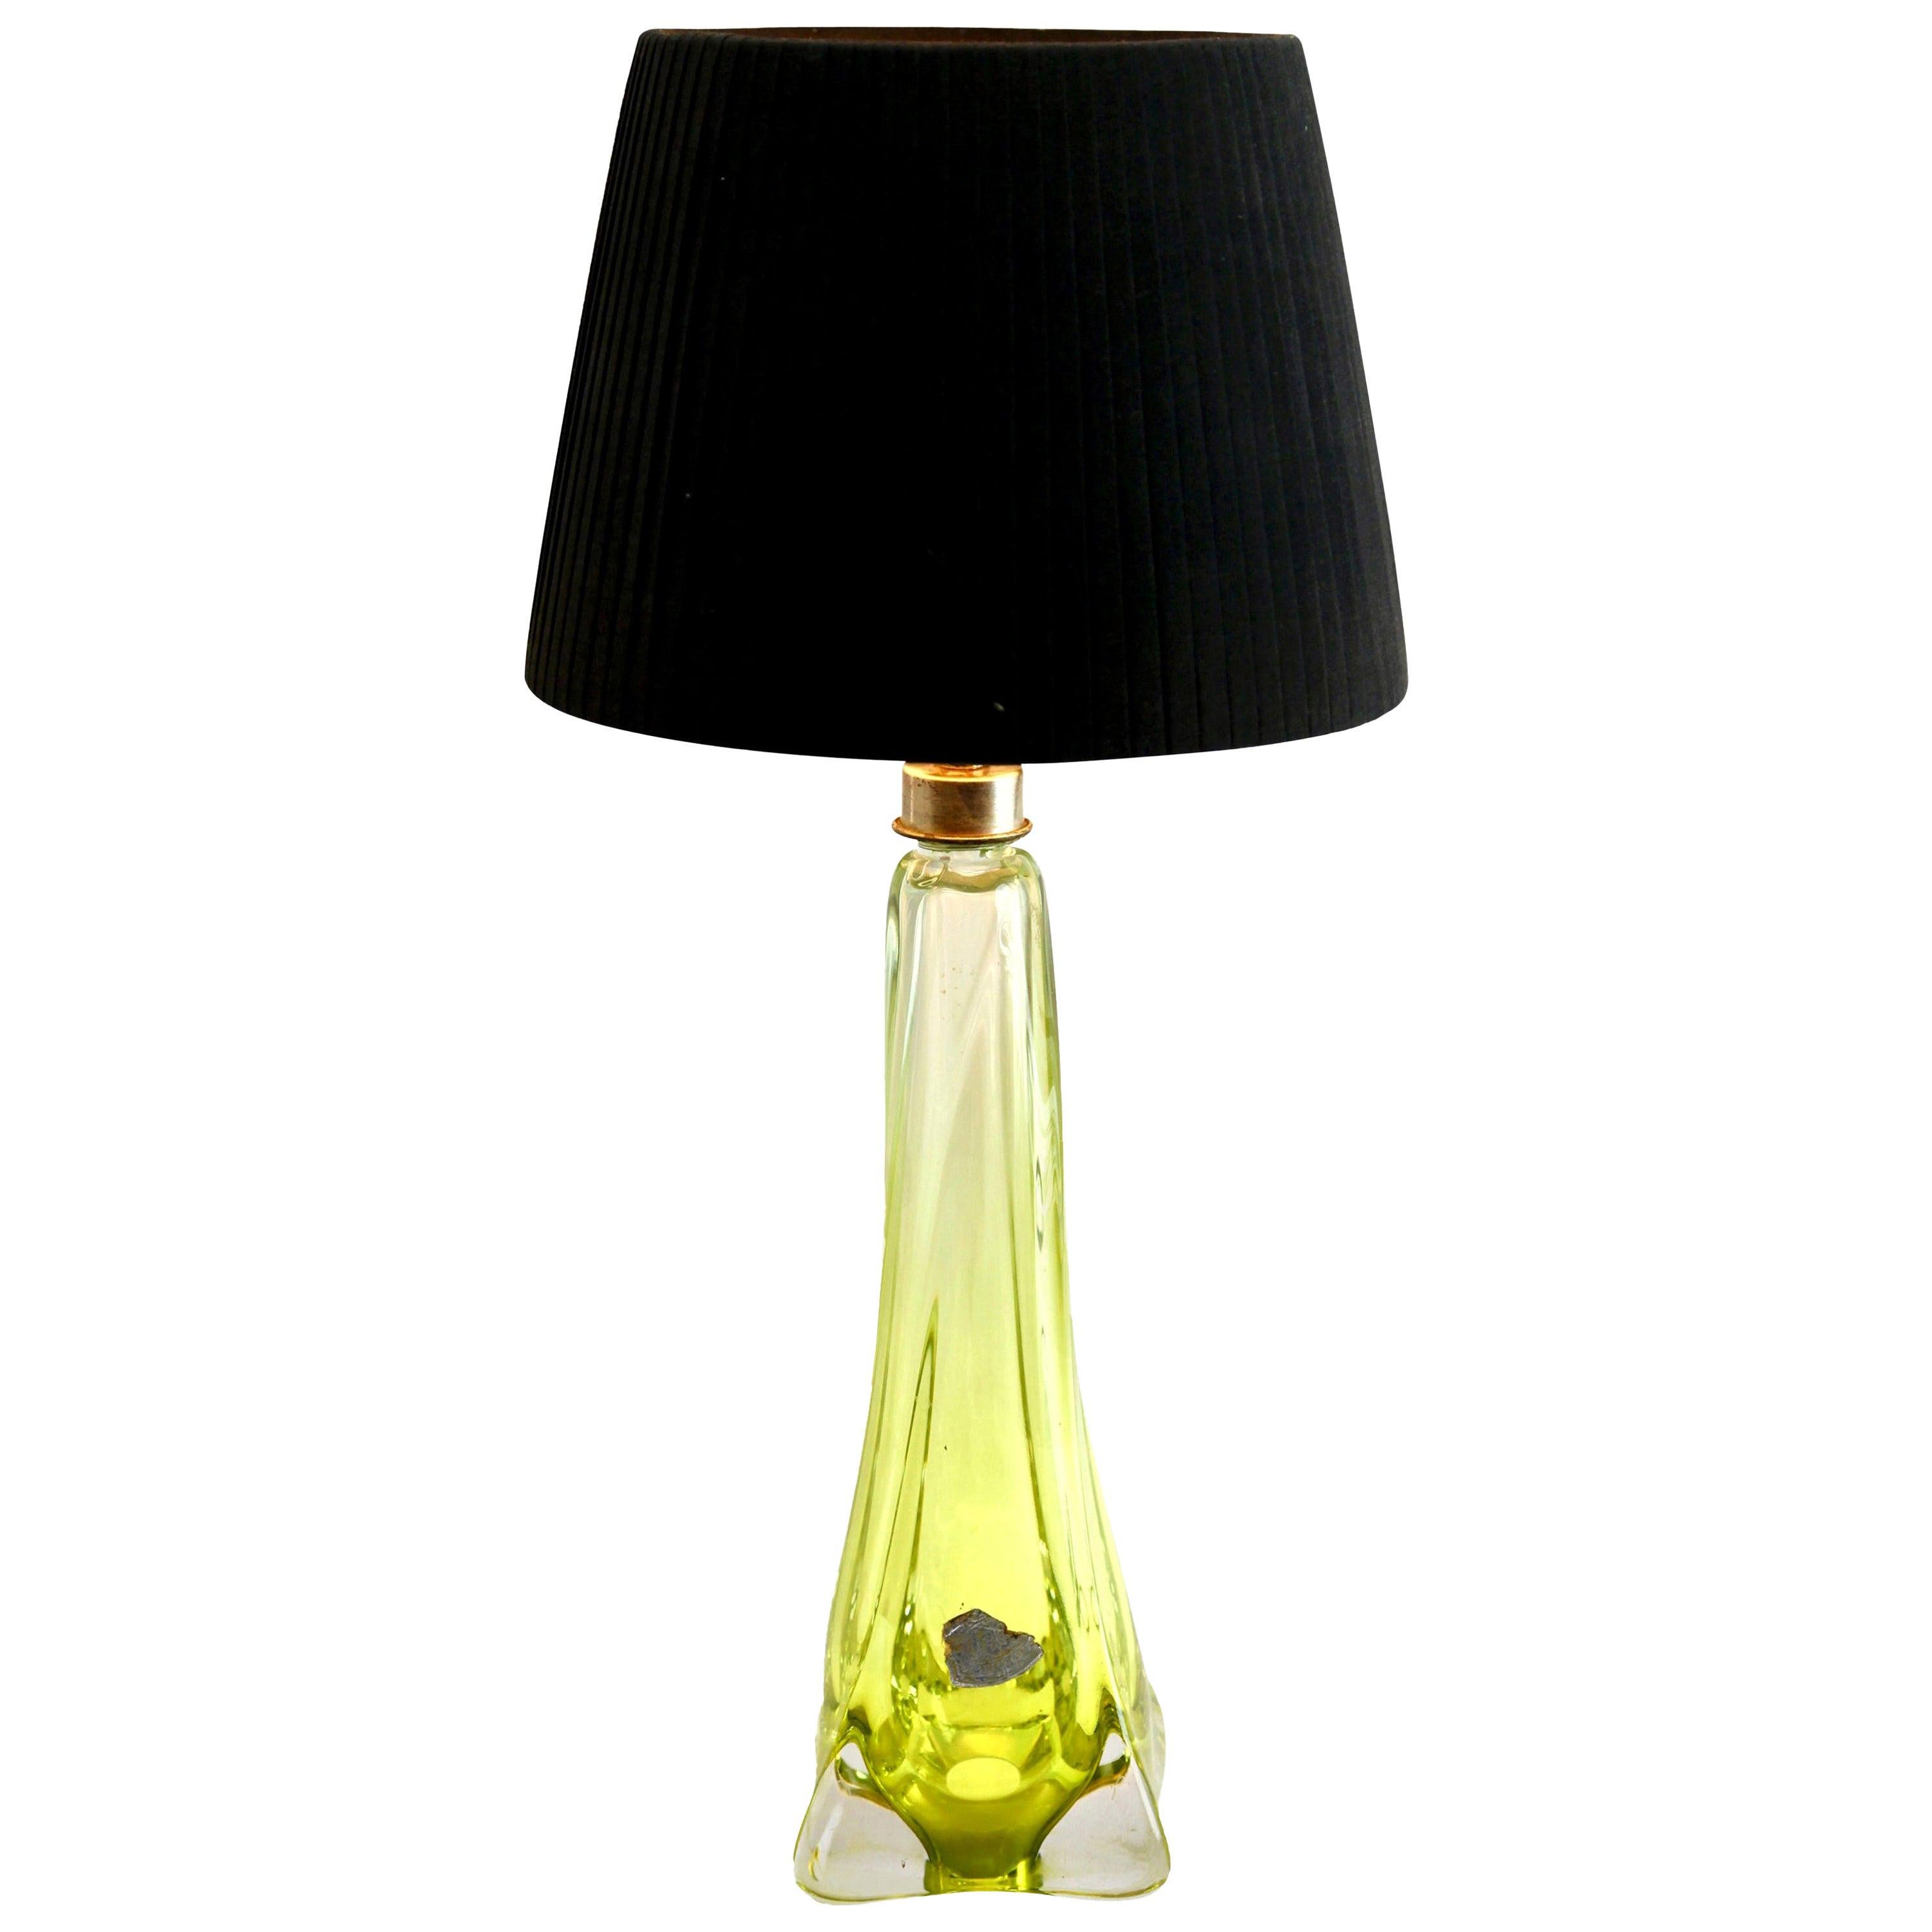 Lampe de bureau en verre de cristal torsadé « Torsadé Light » signée Val Saint Lambert, années 1953